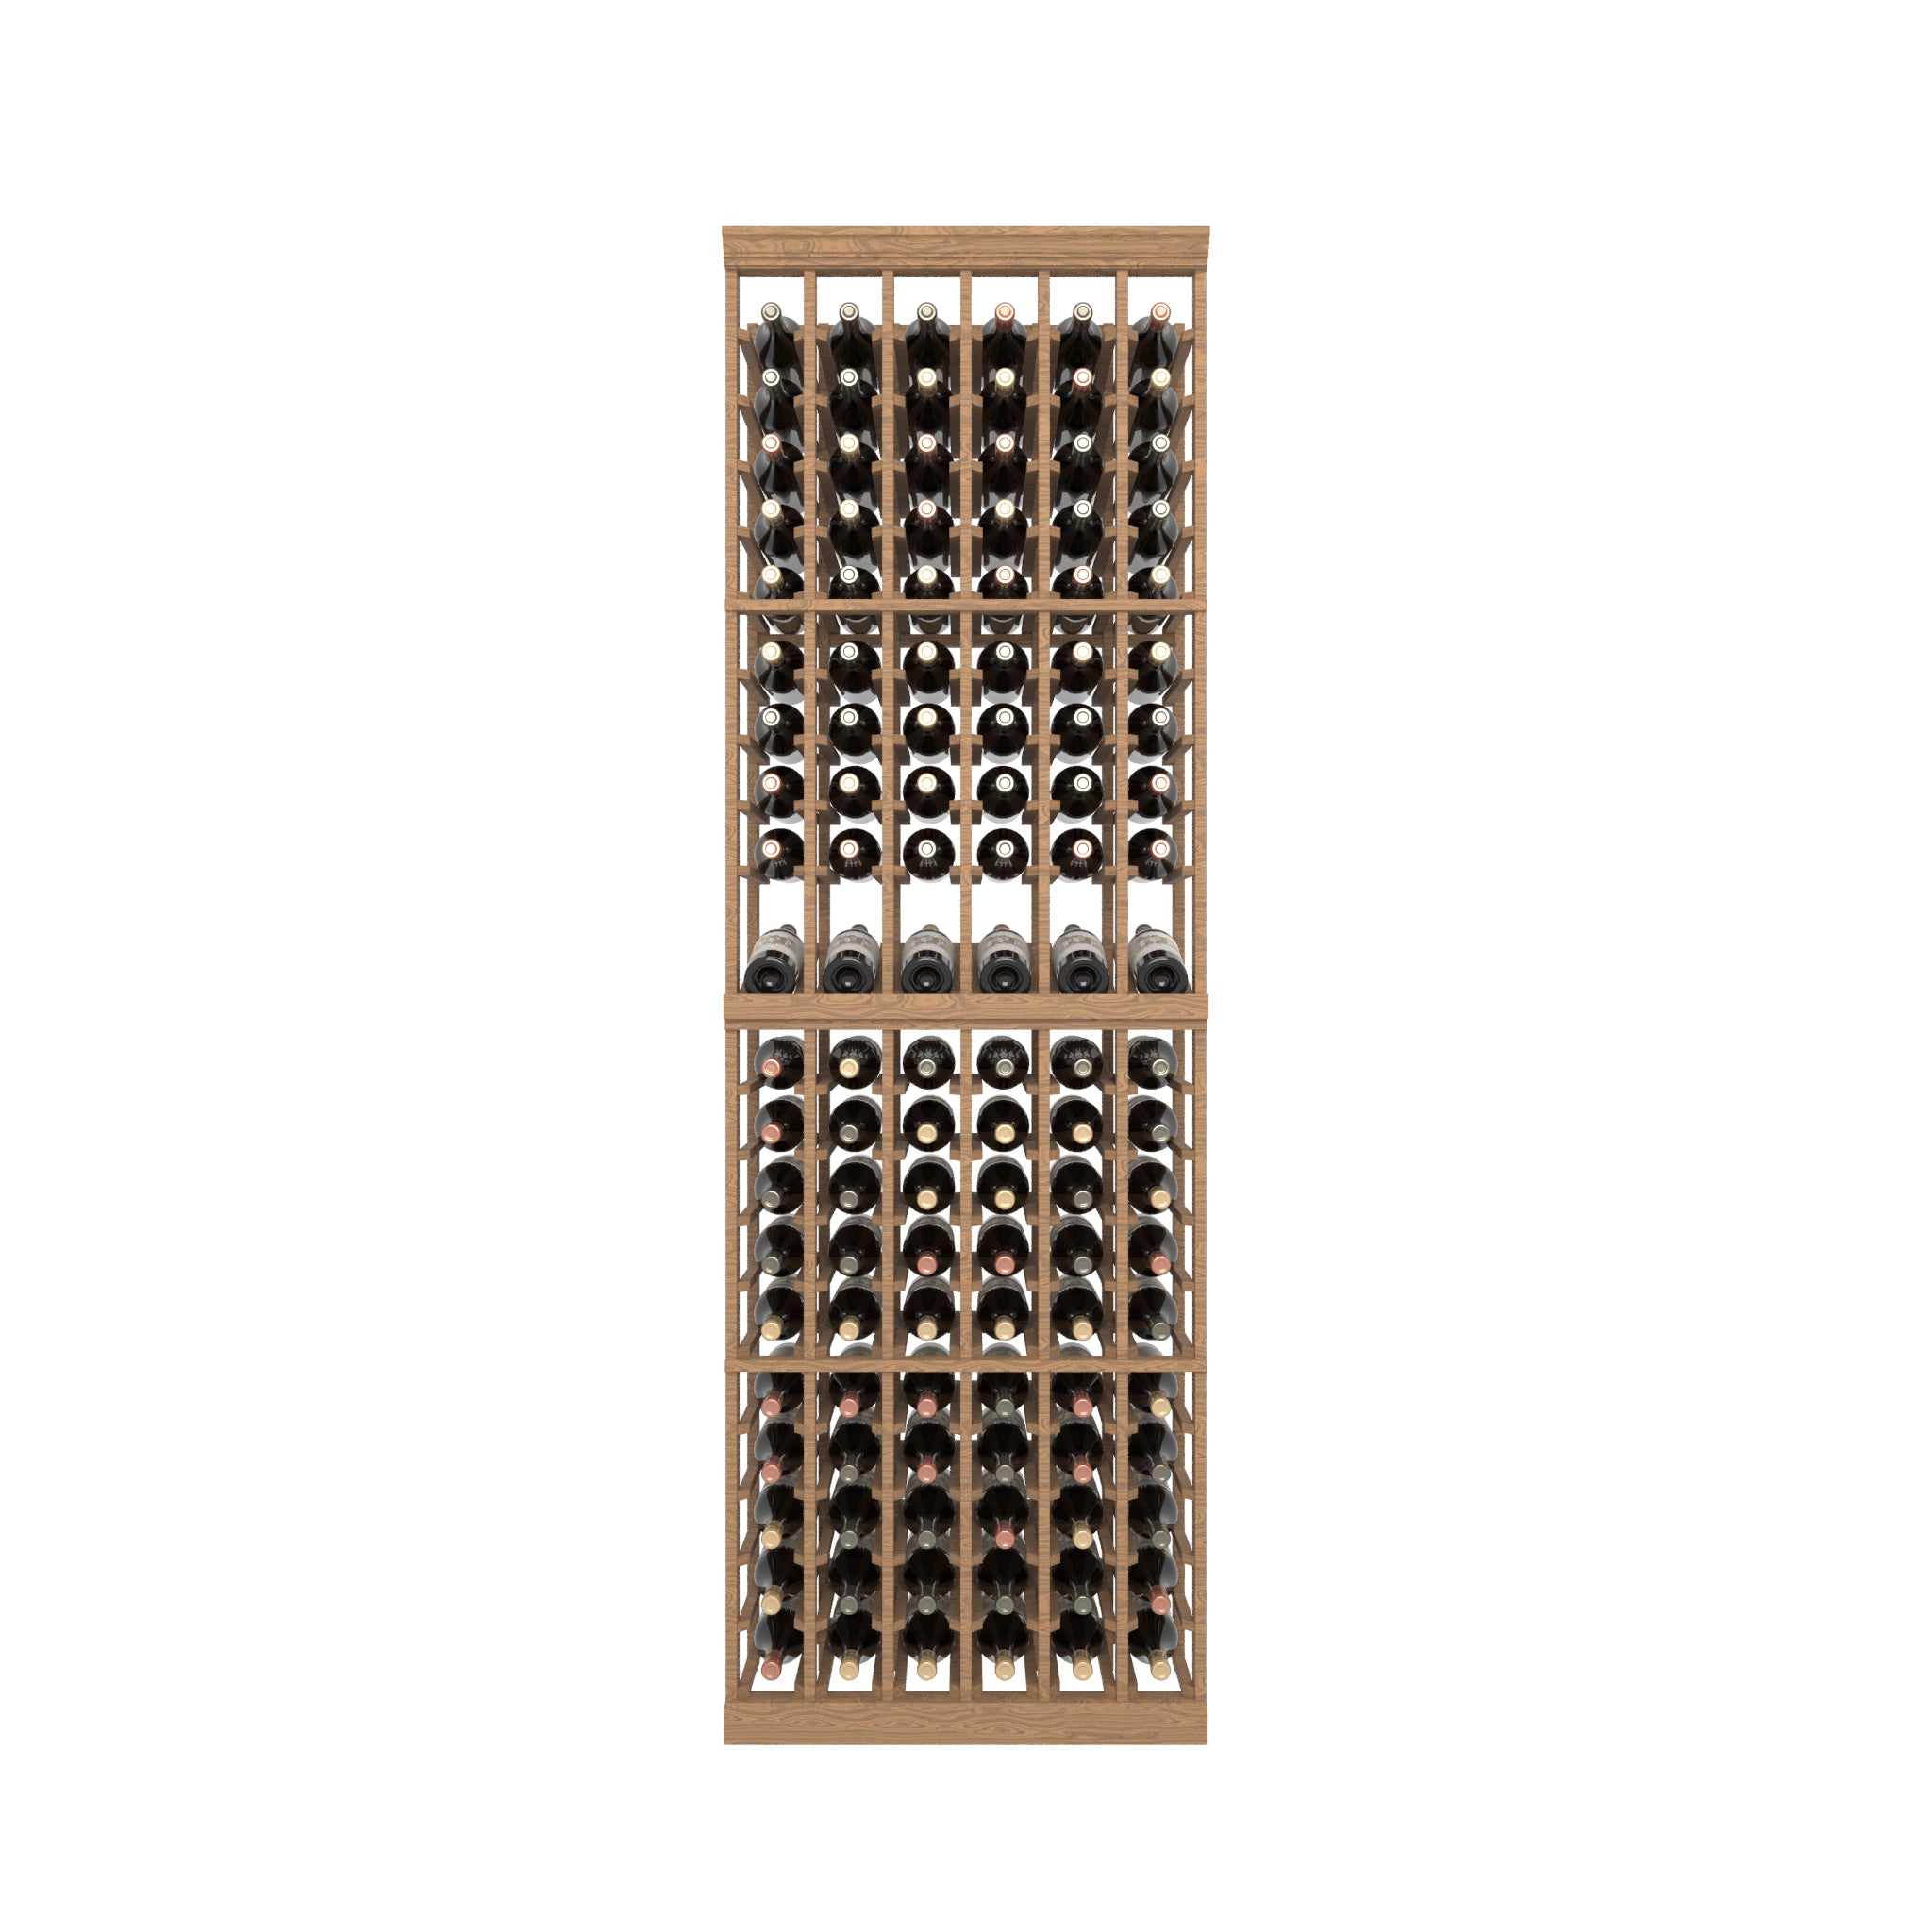 06 Column Rack with Display Row - 750ml Bottles